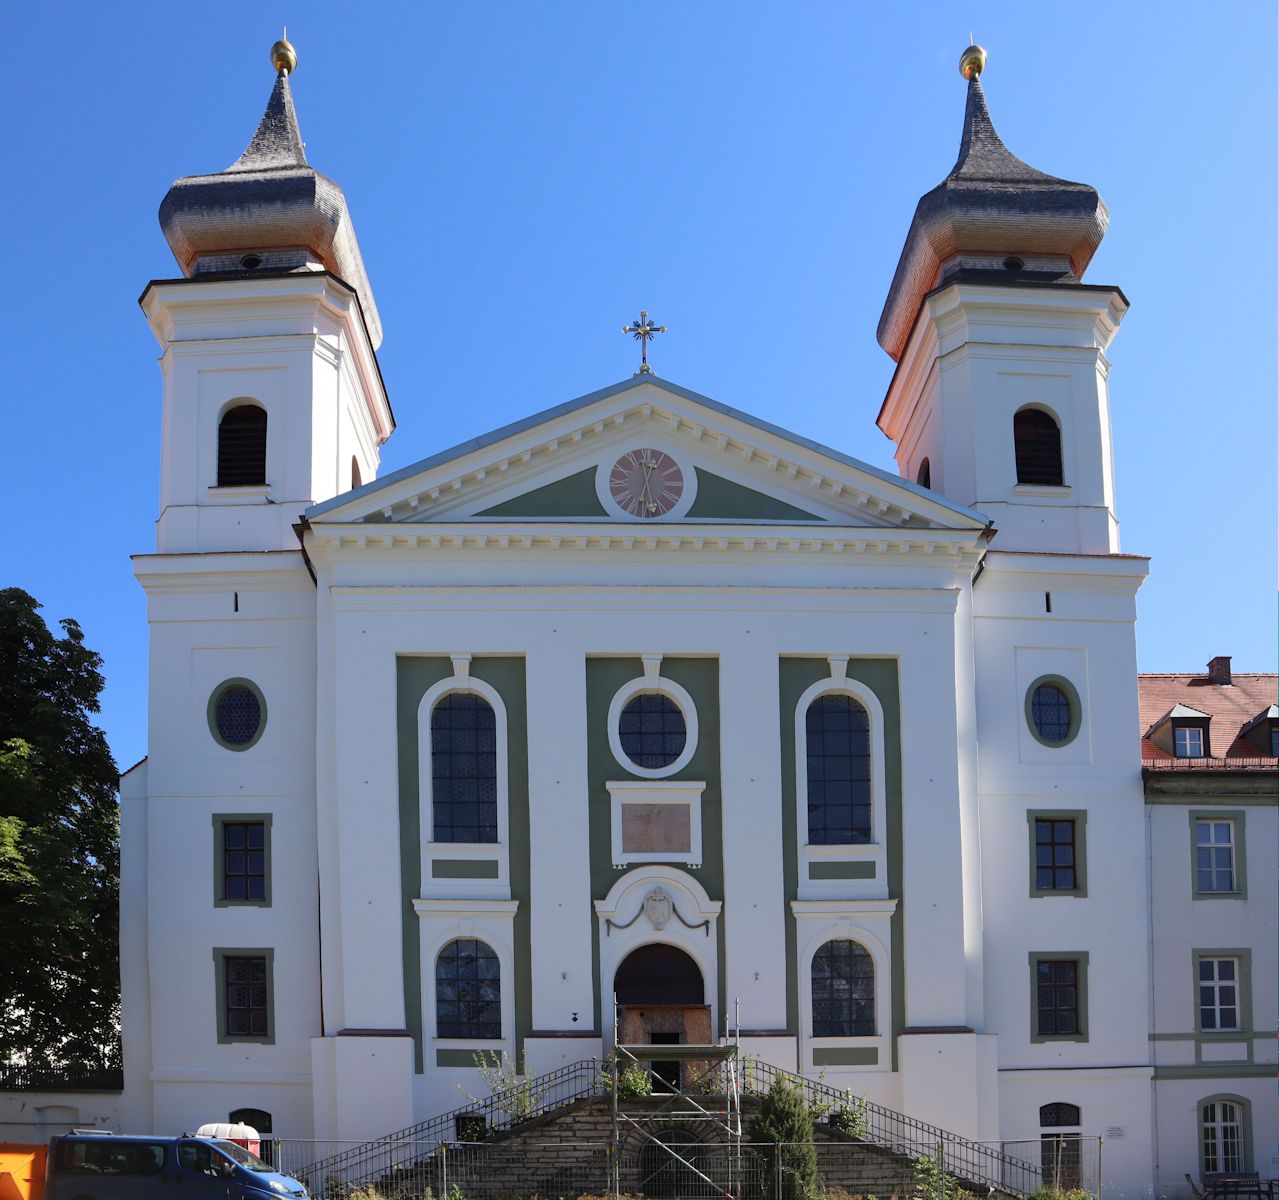 Kirche des ehemaligen Klosters Schlehdorf am Kochelsee